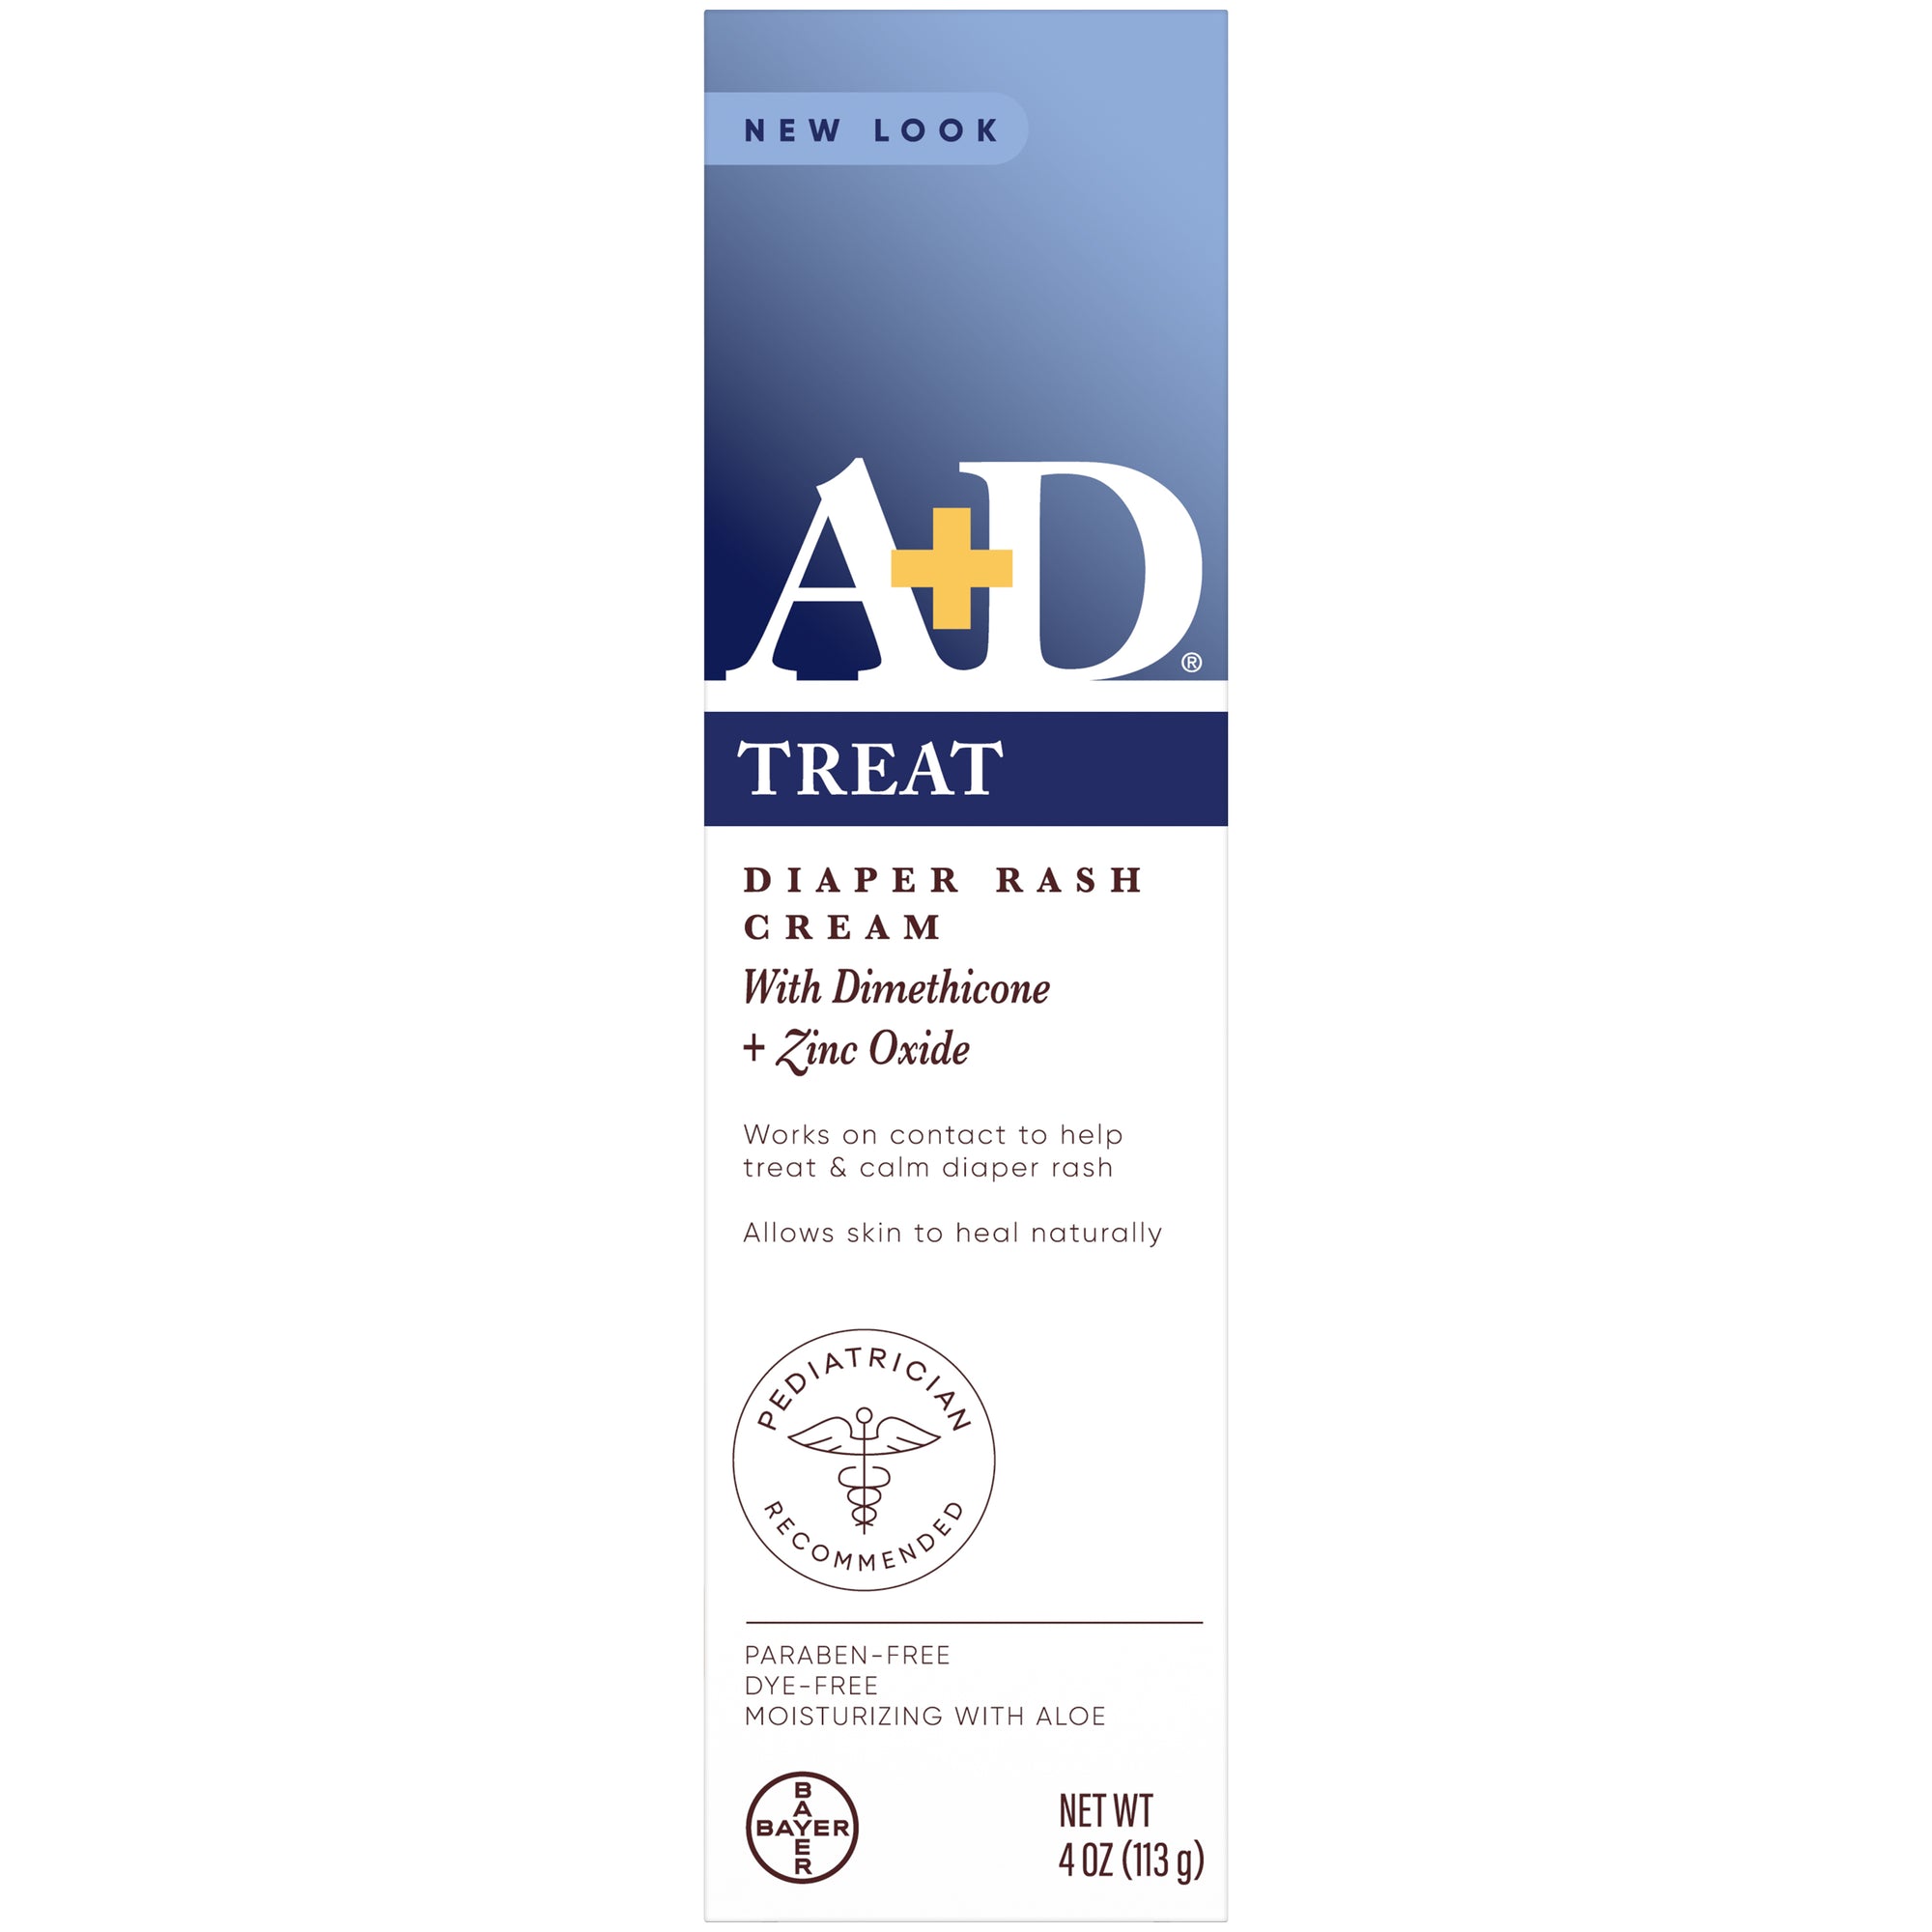 A + D Treat Diaper Rash Cream, 4 Oz